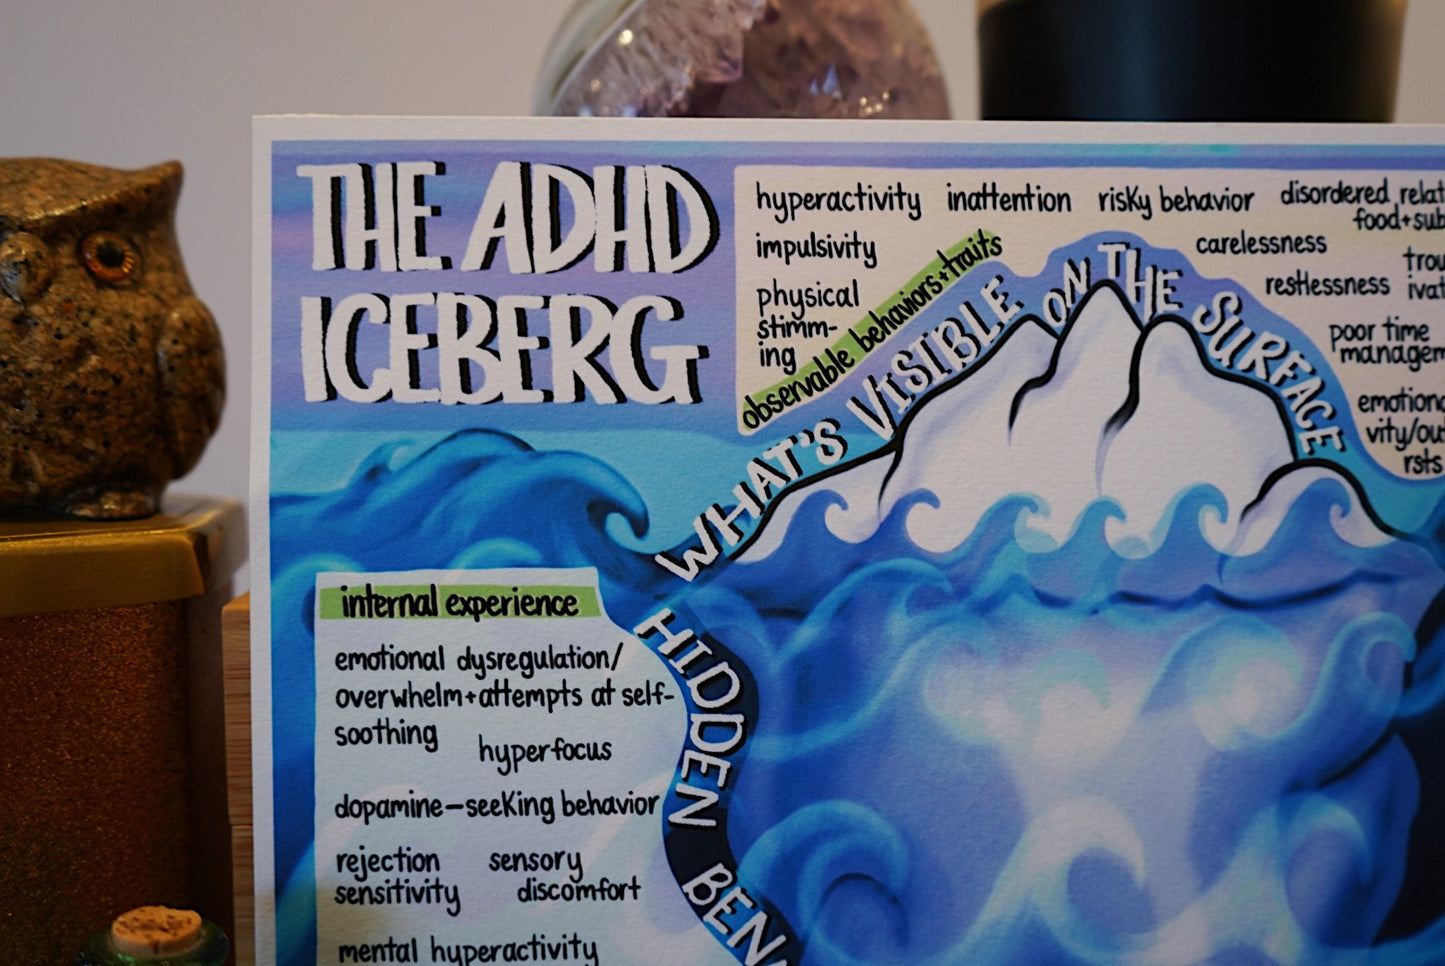 The ADHD Iceberg